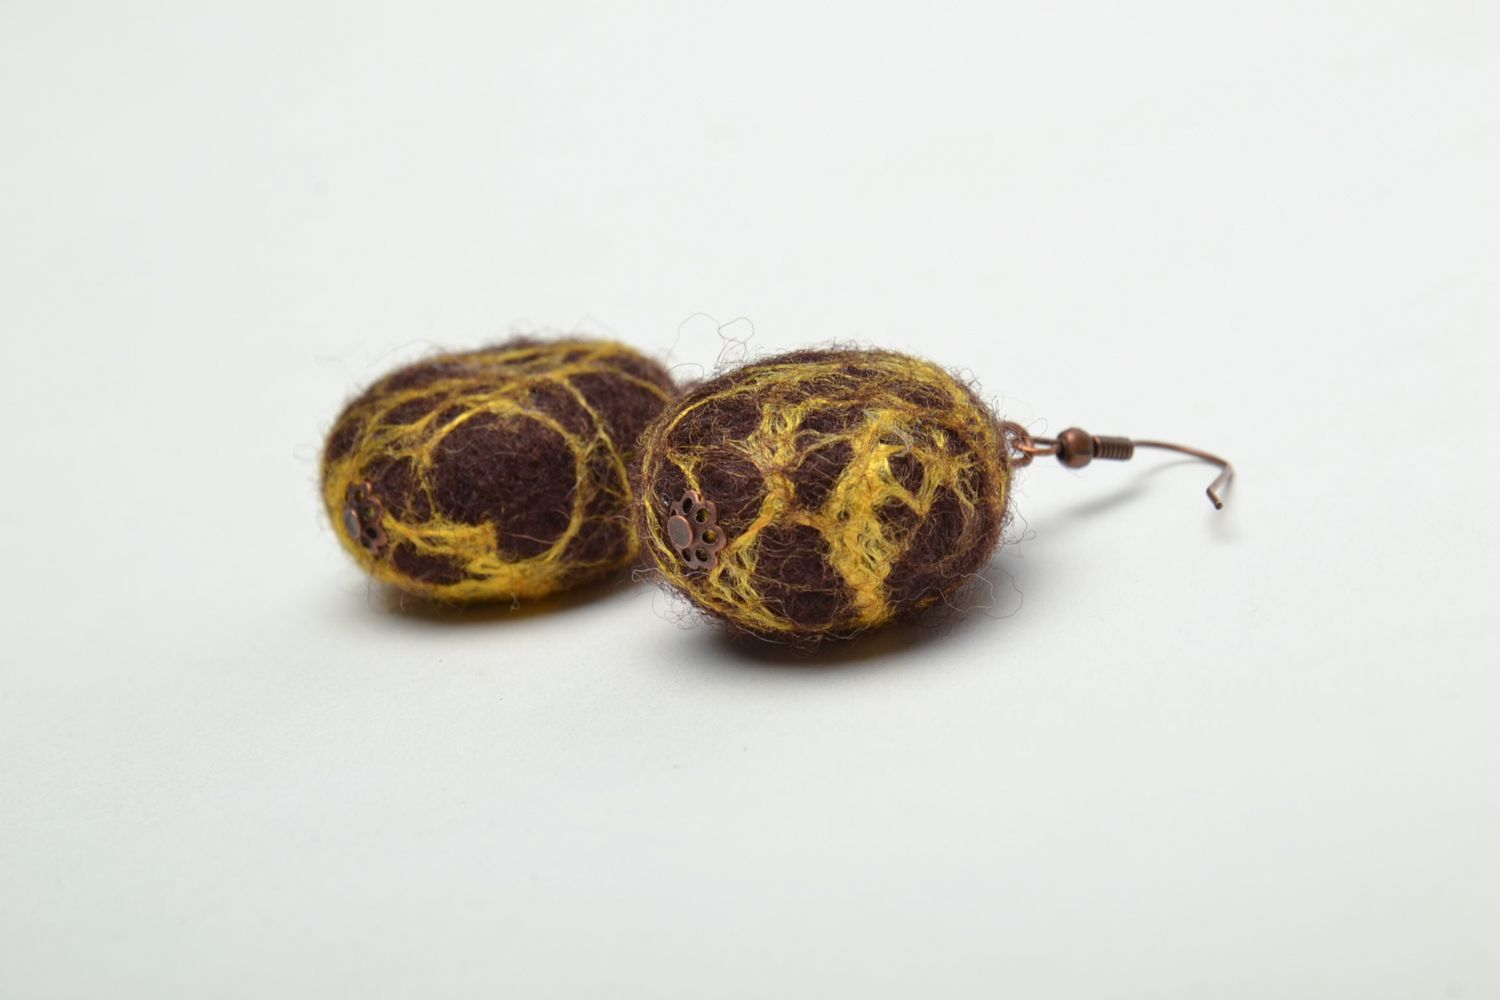 Handmade felted wool earrings photo 5